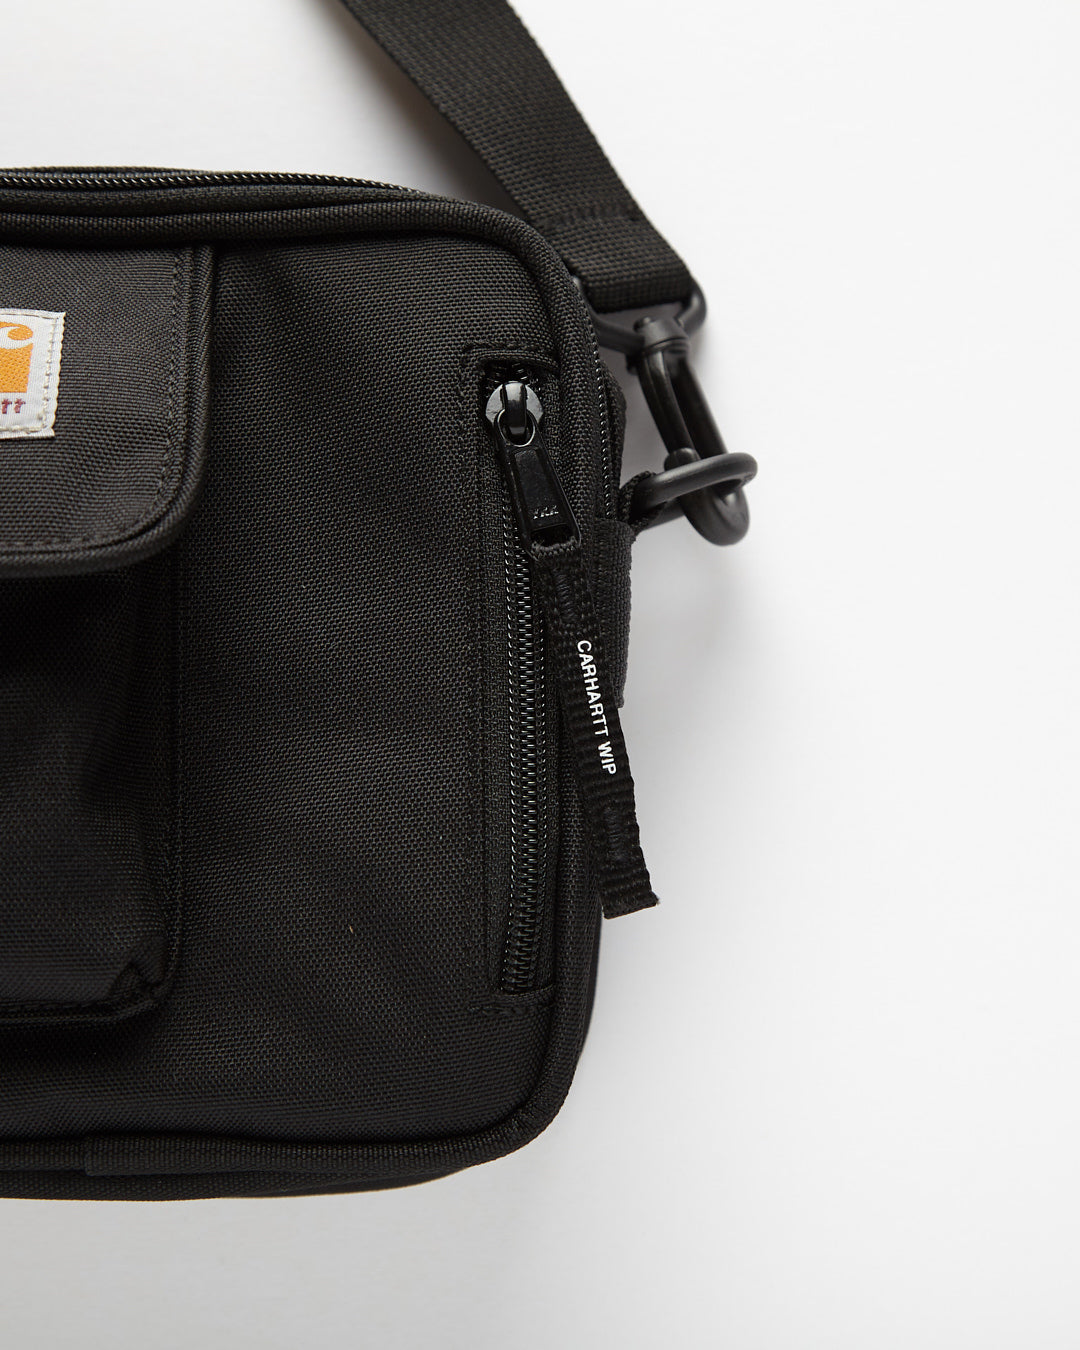 Unspoken | Carhartt WIP Essentials Bag - Black